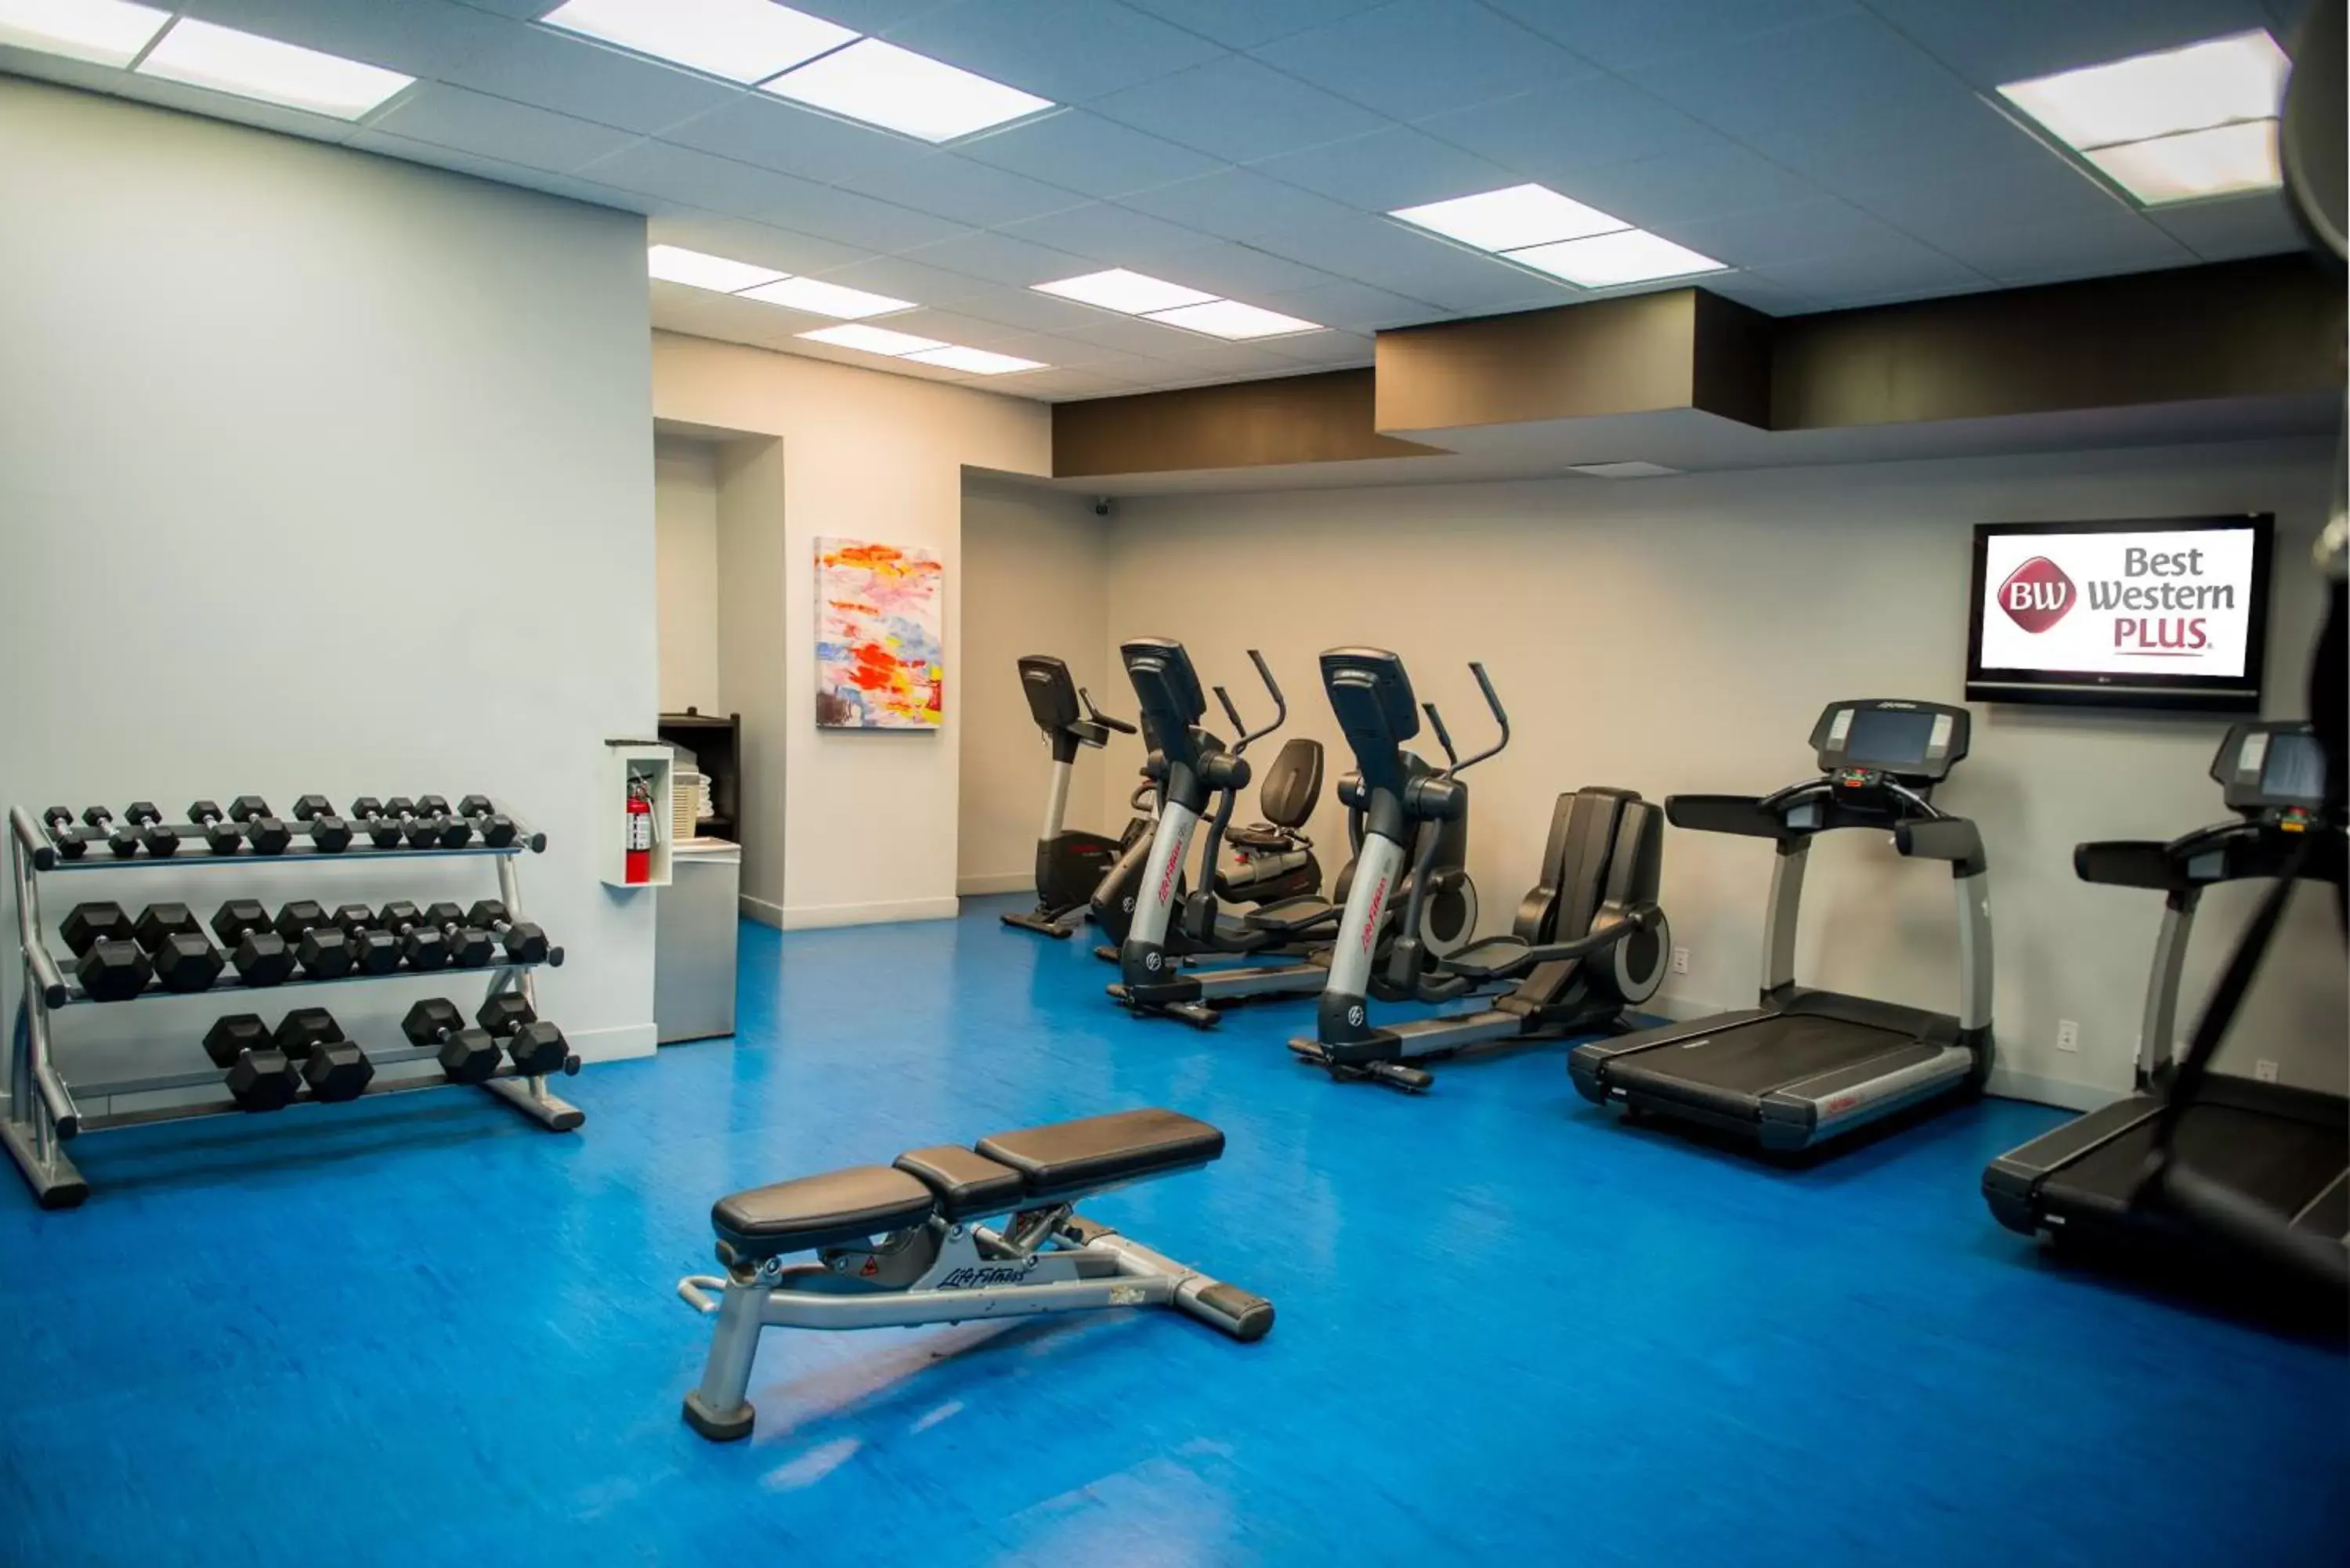 Fitness centre/facilities, Fitness Center/Facilities in Best Western Plus Village Park Inn